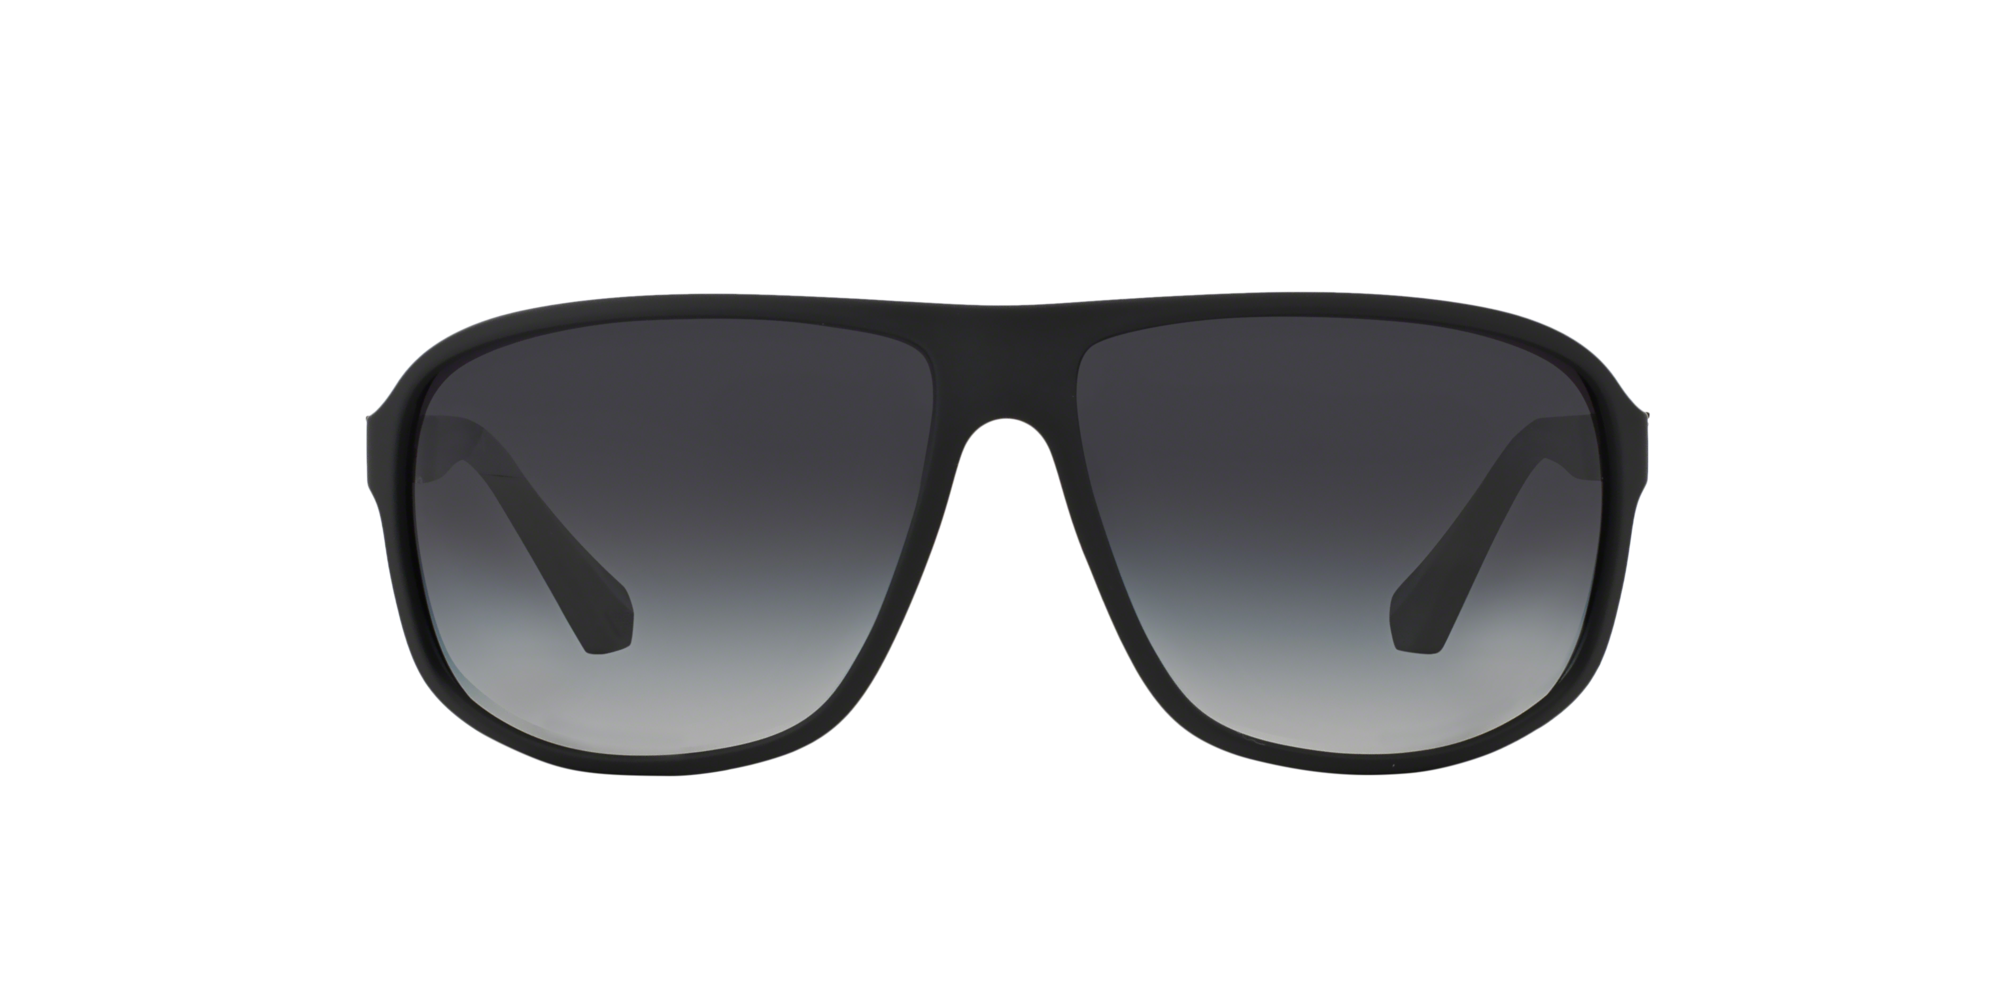 Emporio Armani Sunglasses | Sunglass Hut®